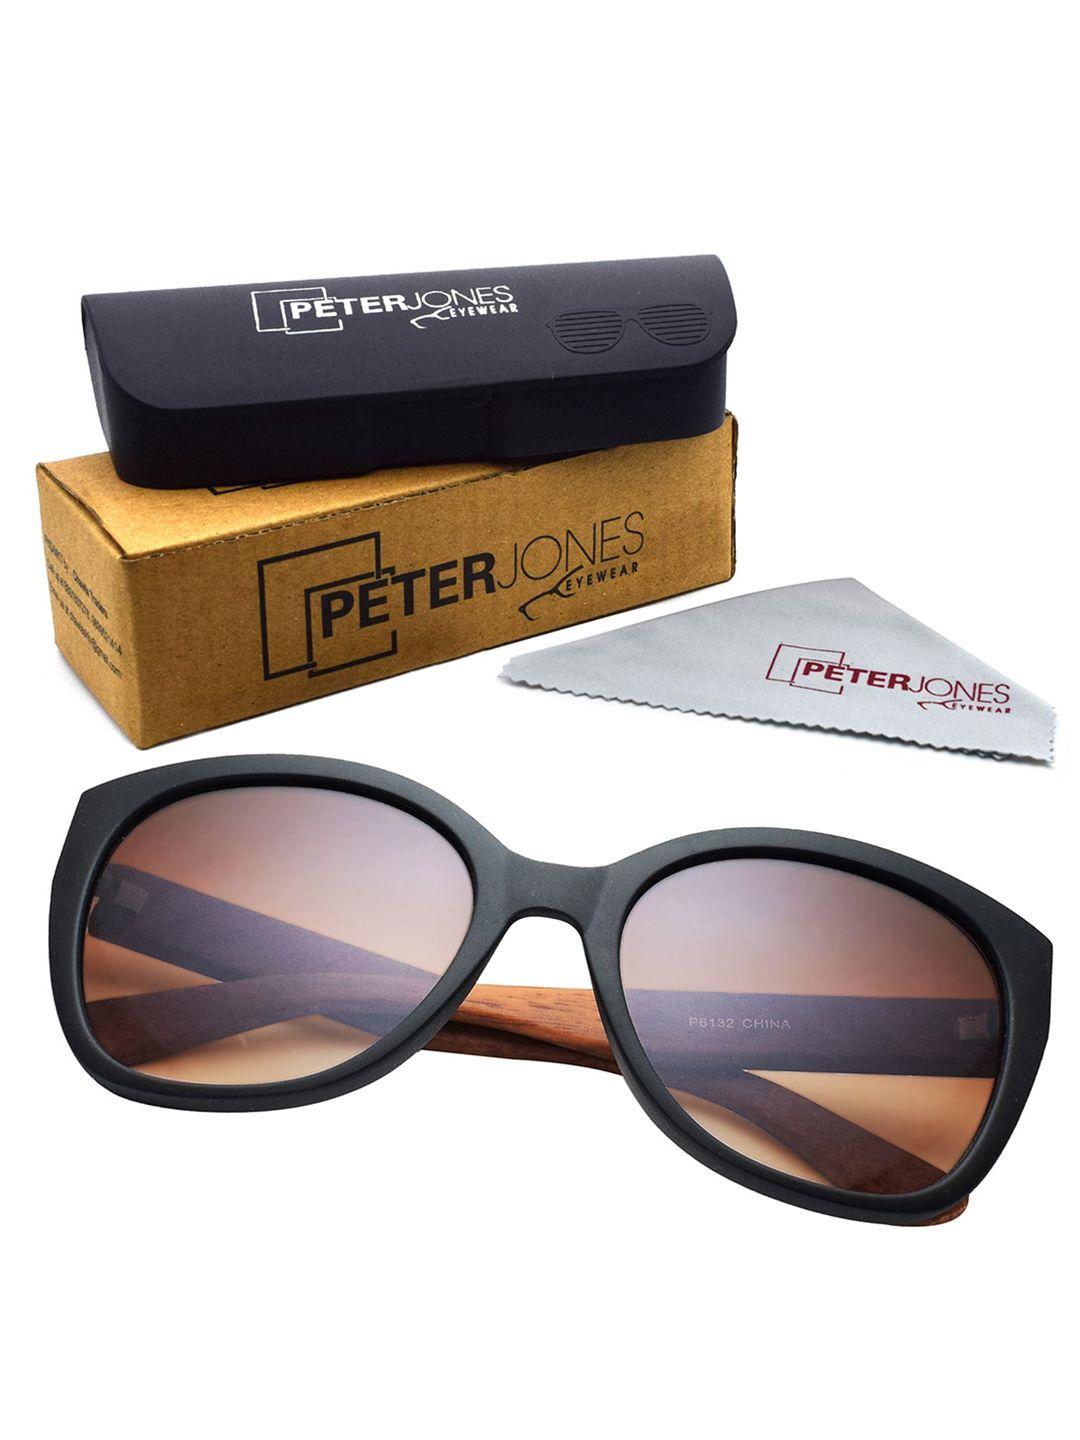 peter jones eyewear unisex cateye sunglasses with uv protected lens 2811bw